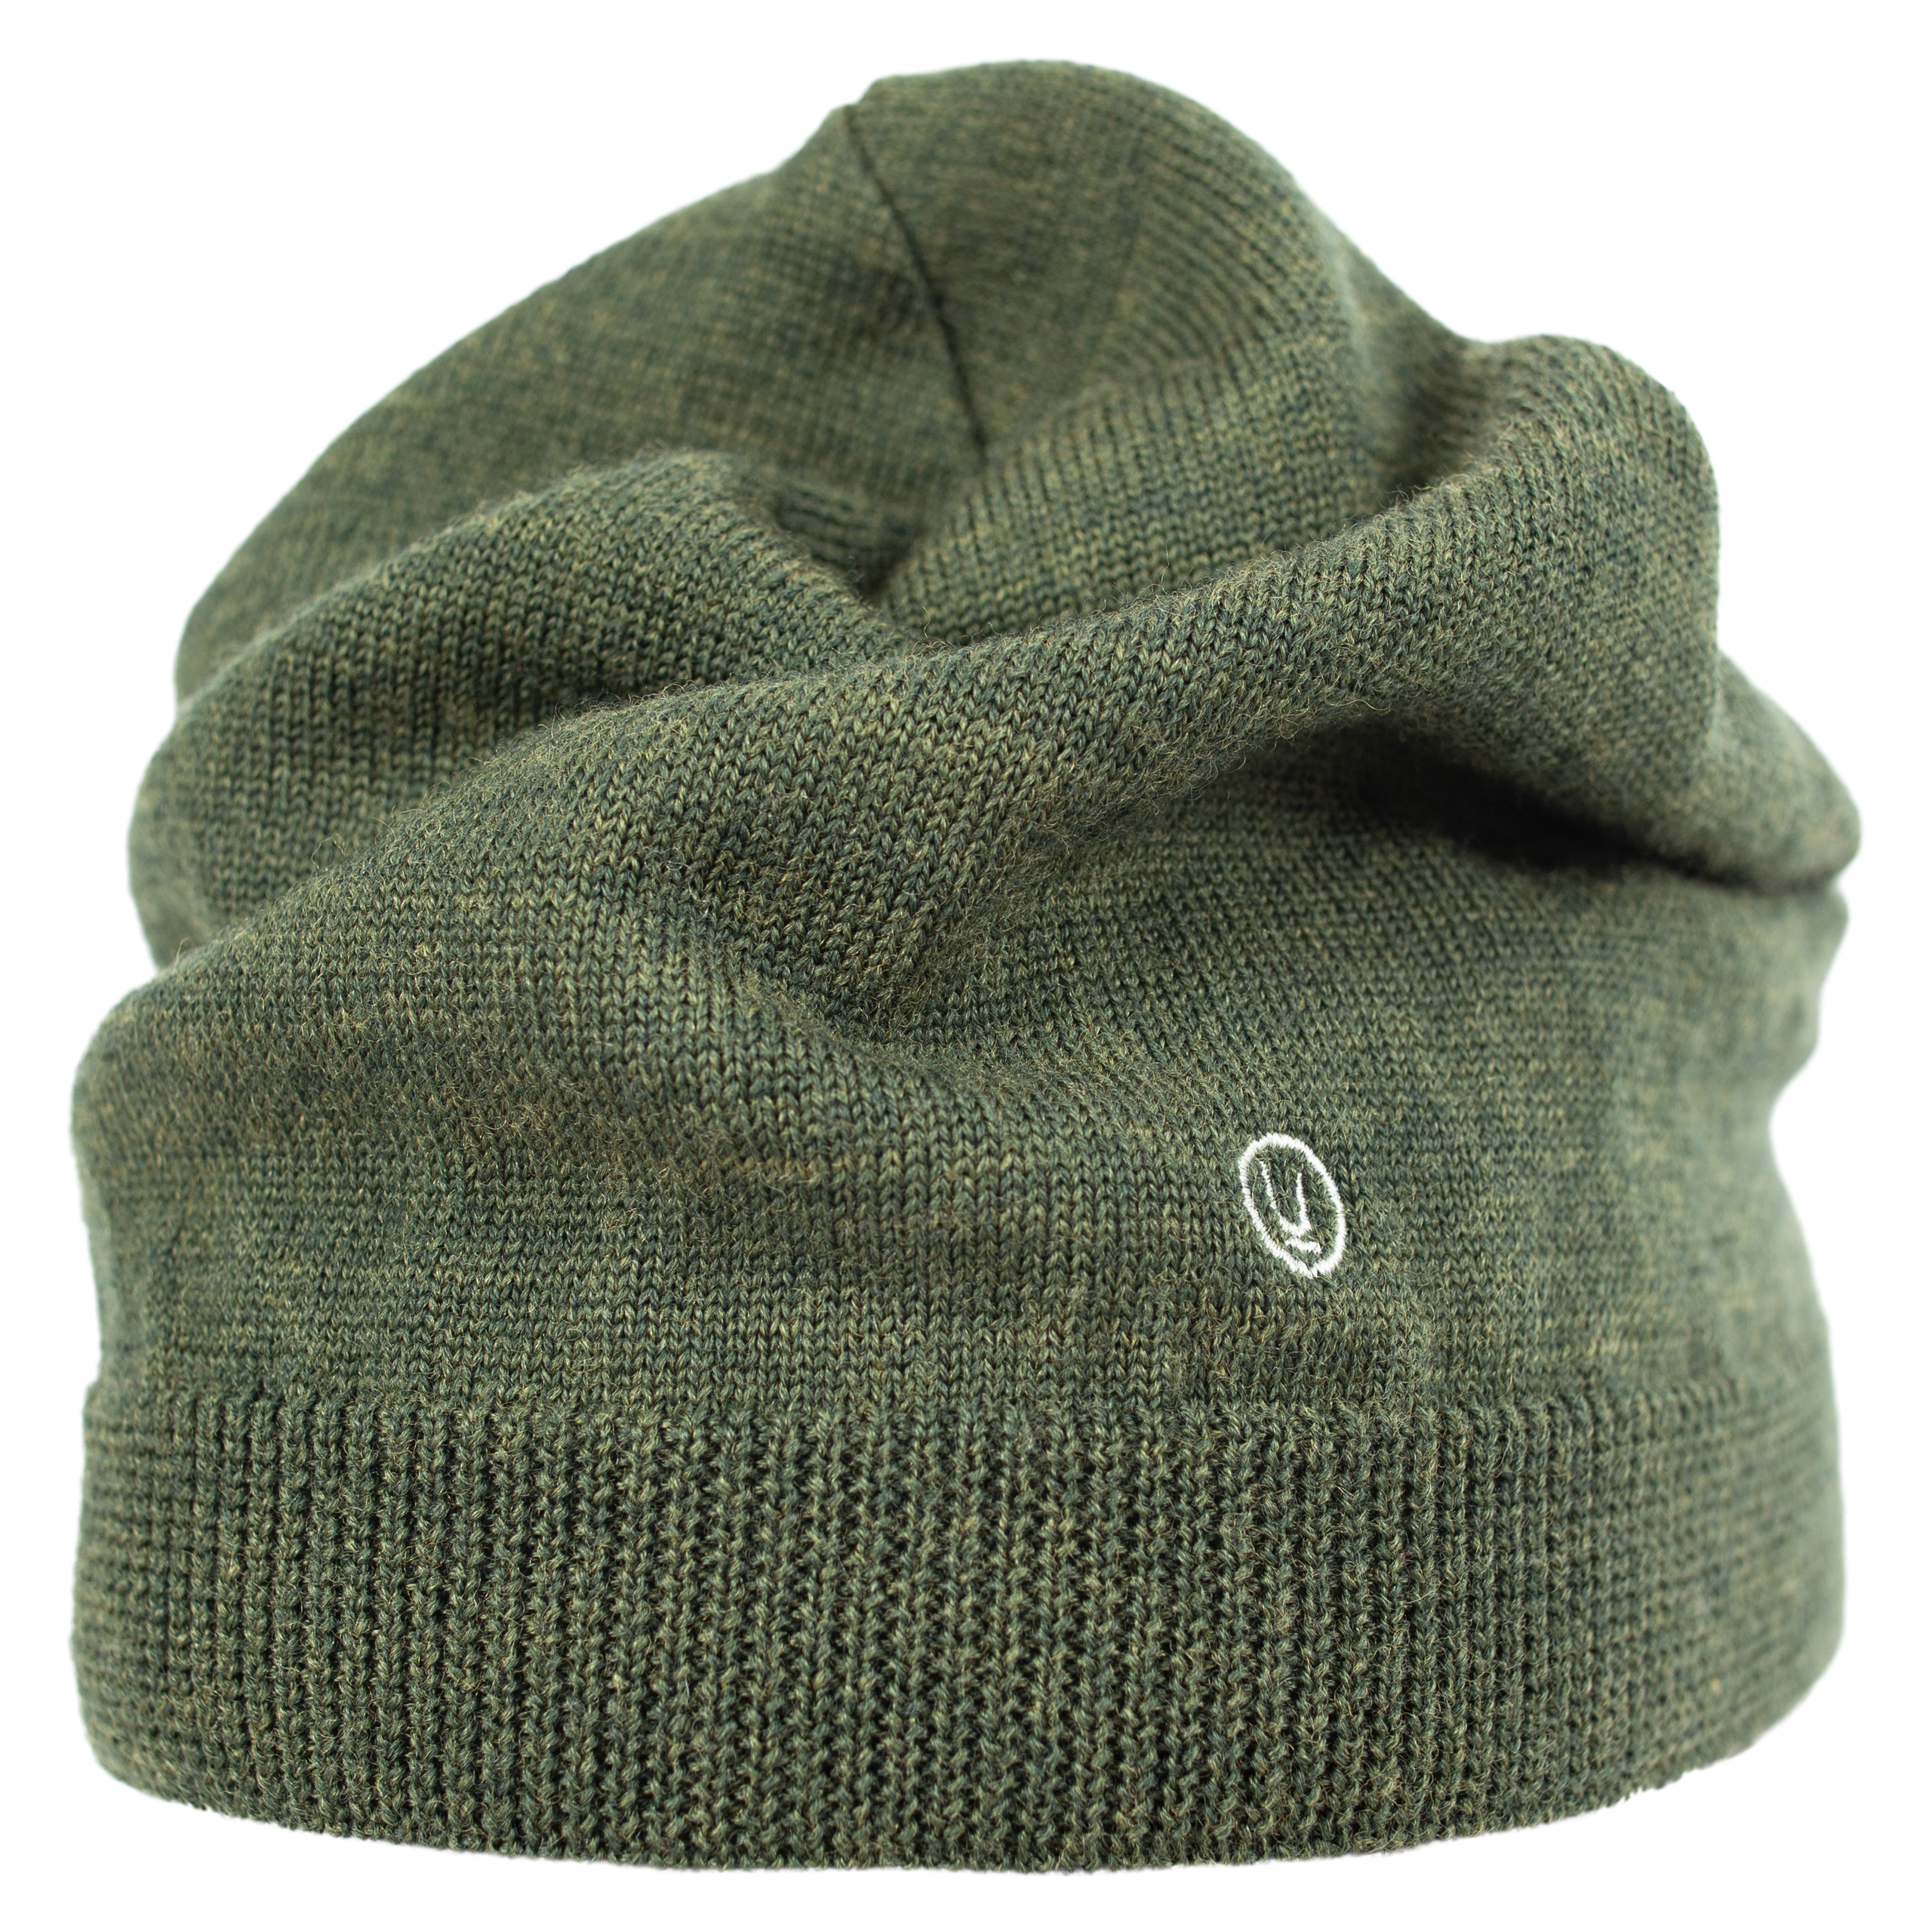 Зеленая шапка с защипом Undercover UC1B4H04/khaki, размер One Size UC1B4H04/khaki - фото 2